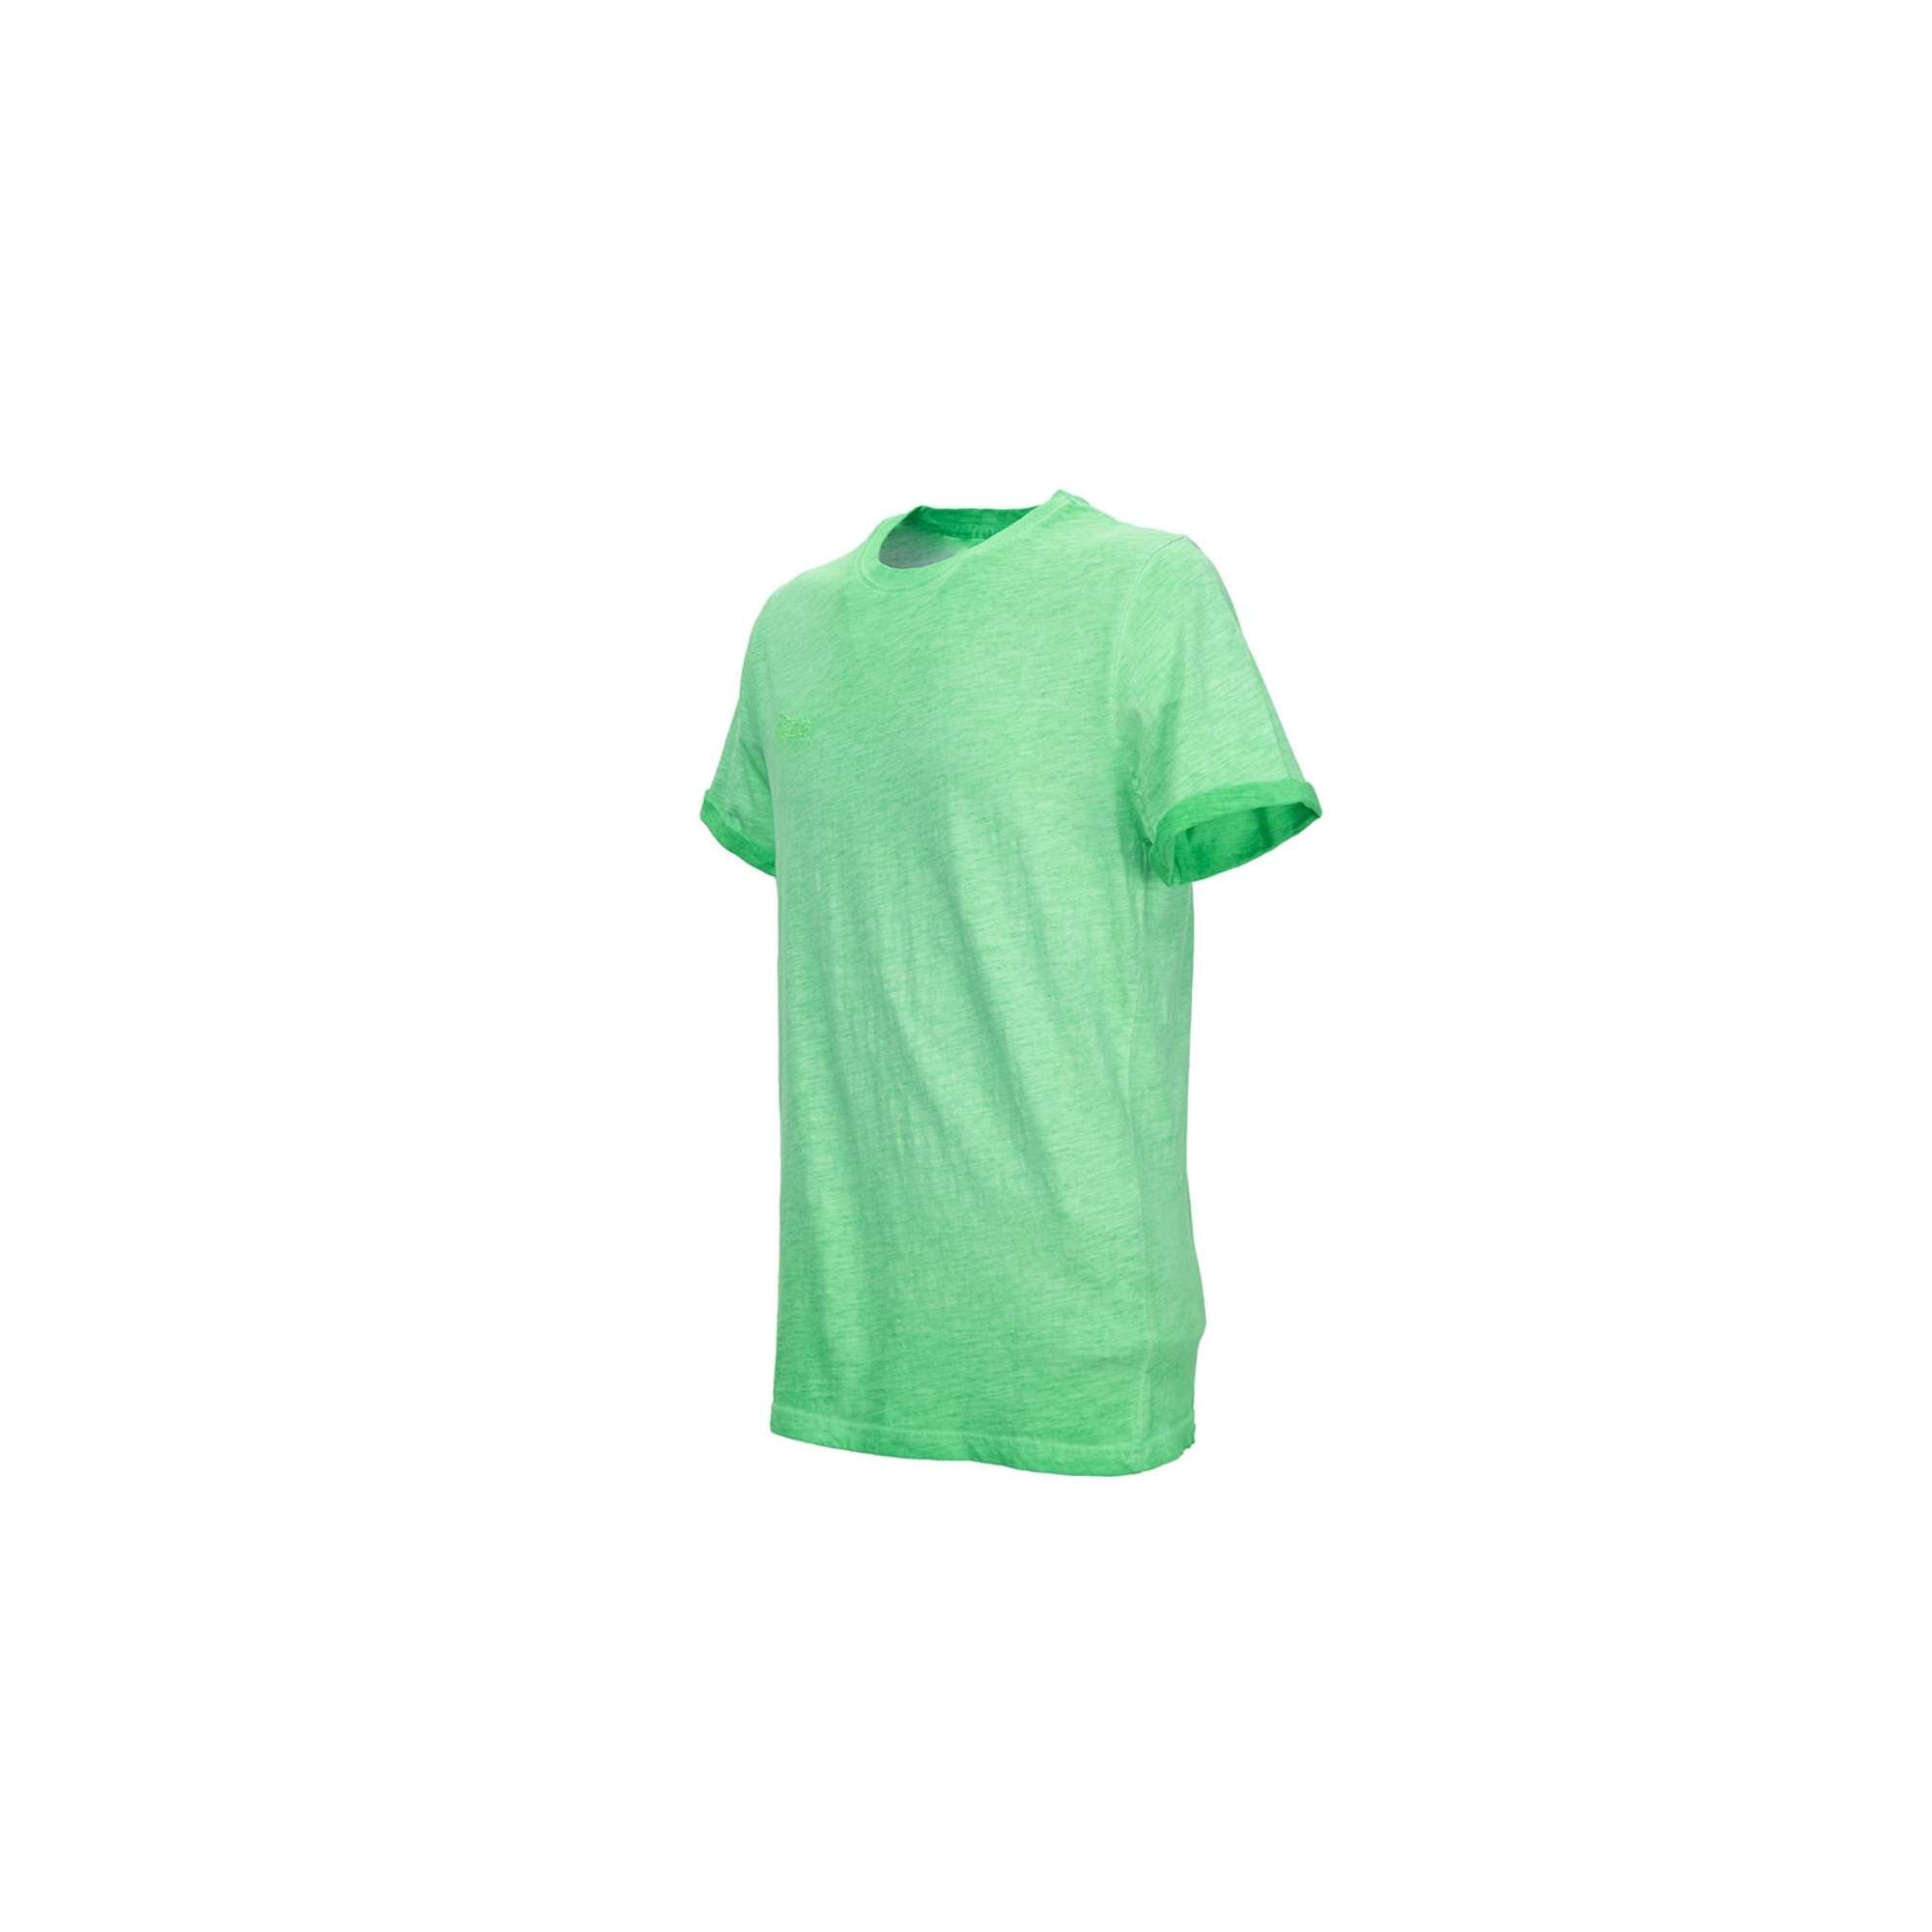 T-Shirt green fluo - U-Power EY195VF